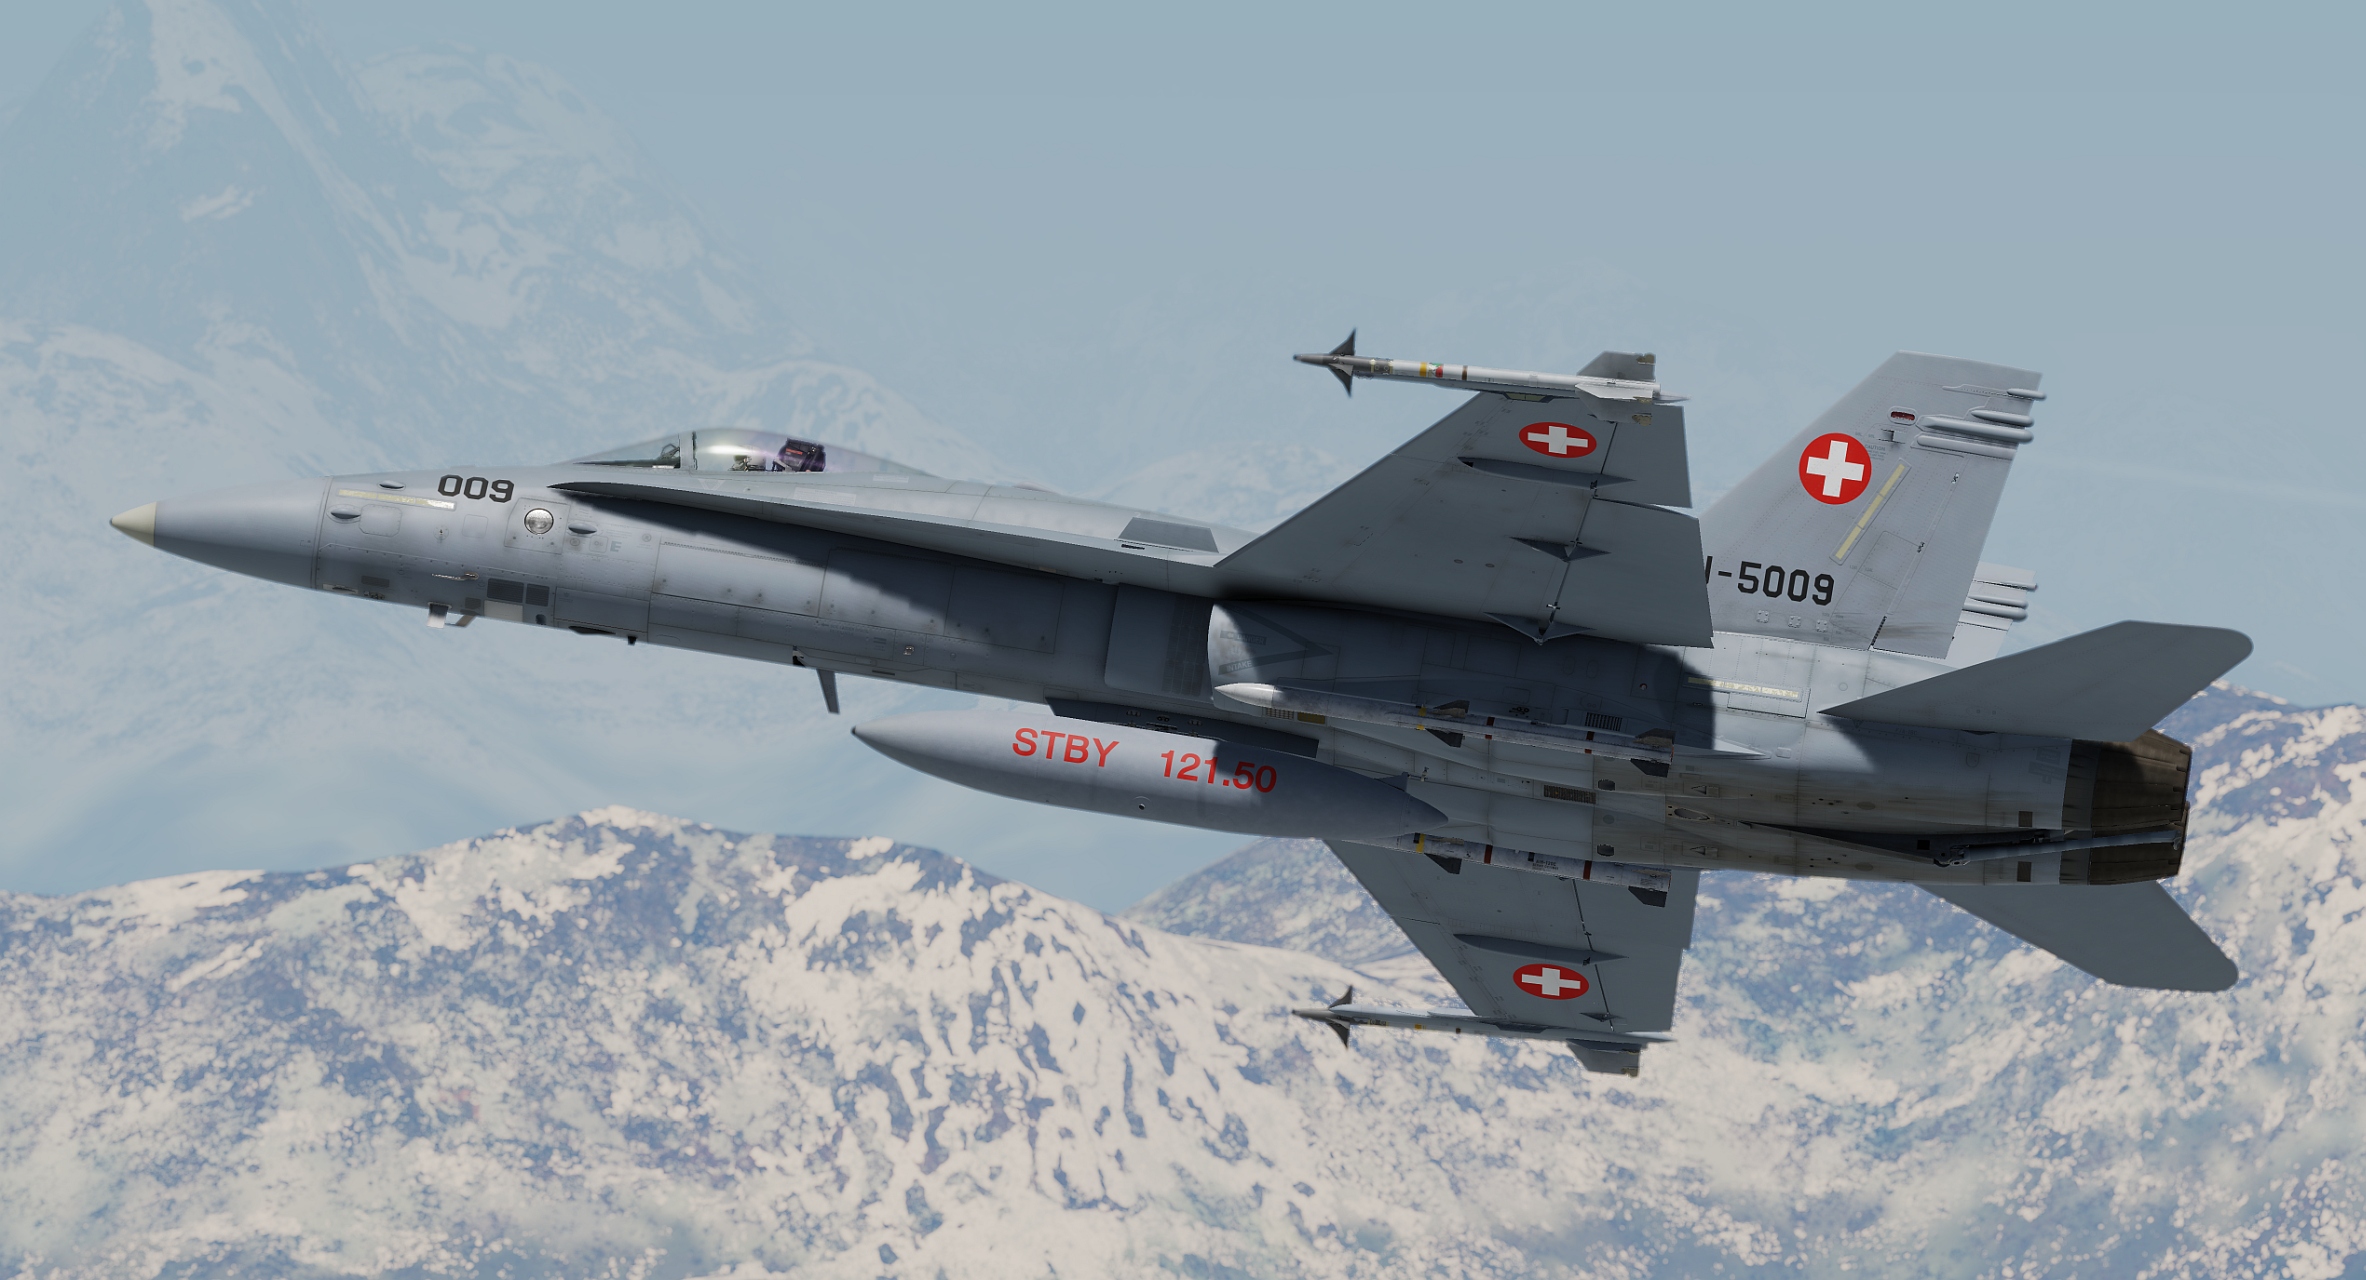 Swiss Air Force Base Livery TRUE 4K v1.2